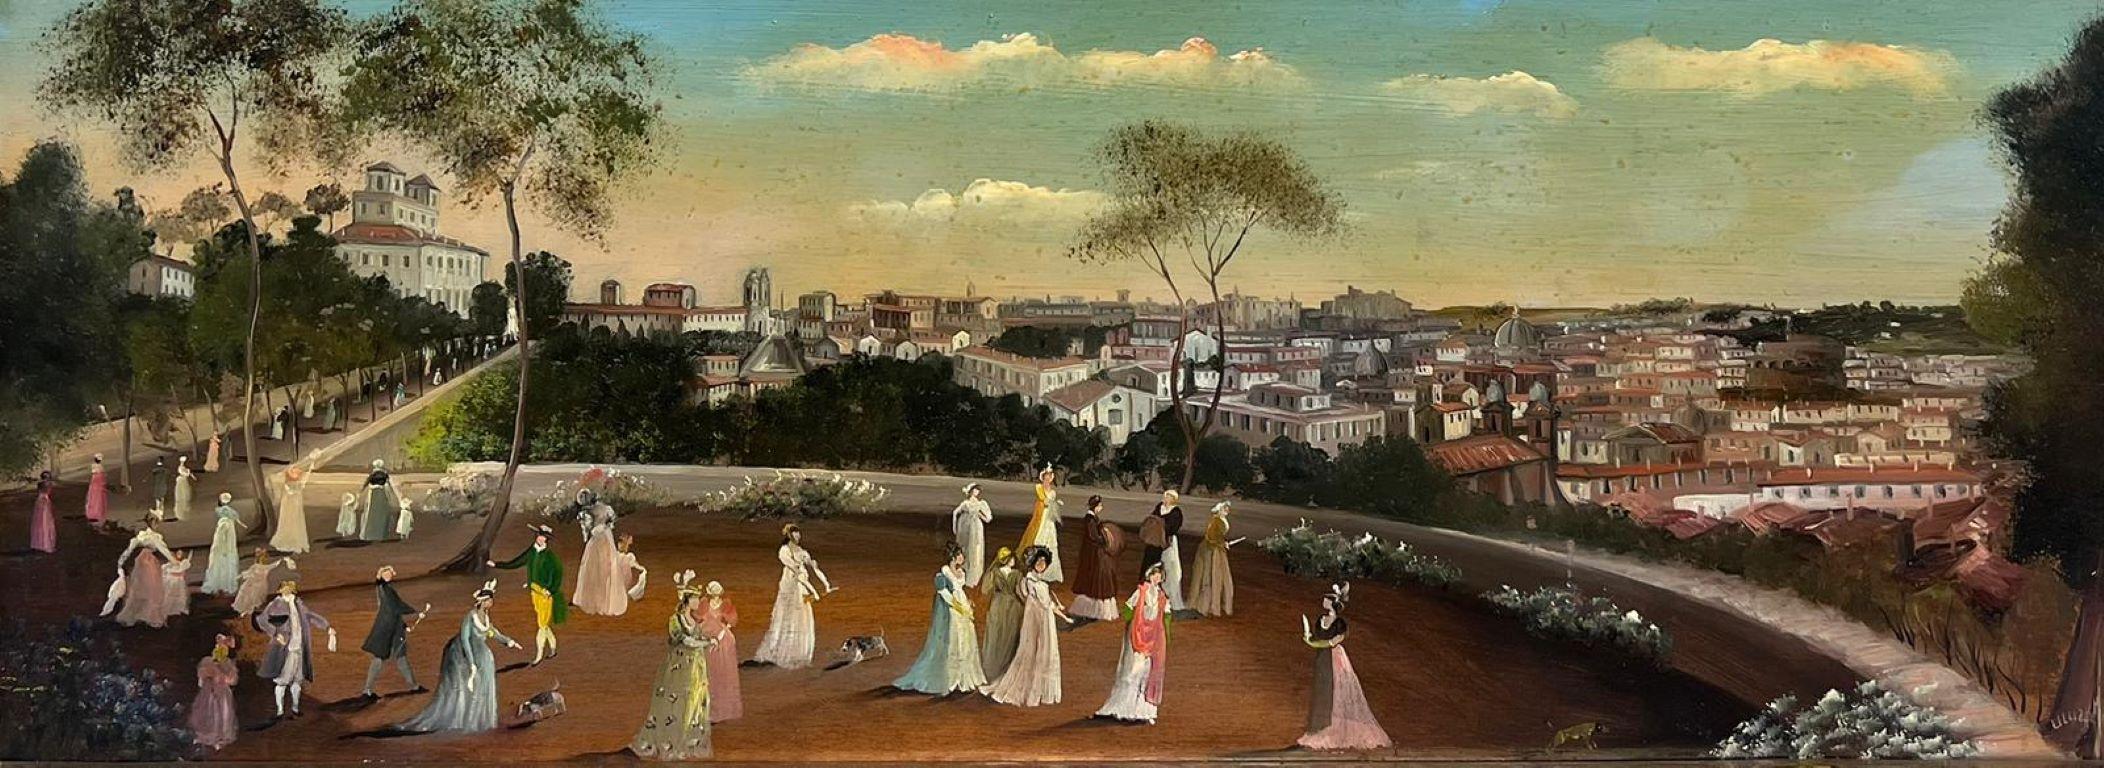 Italian School Landscape Painting - Elegant Figures Promenading in Park overlooking City of Florence Skyline, signed